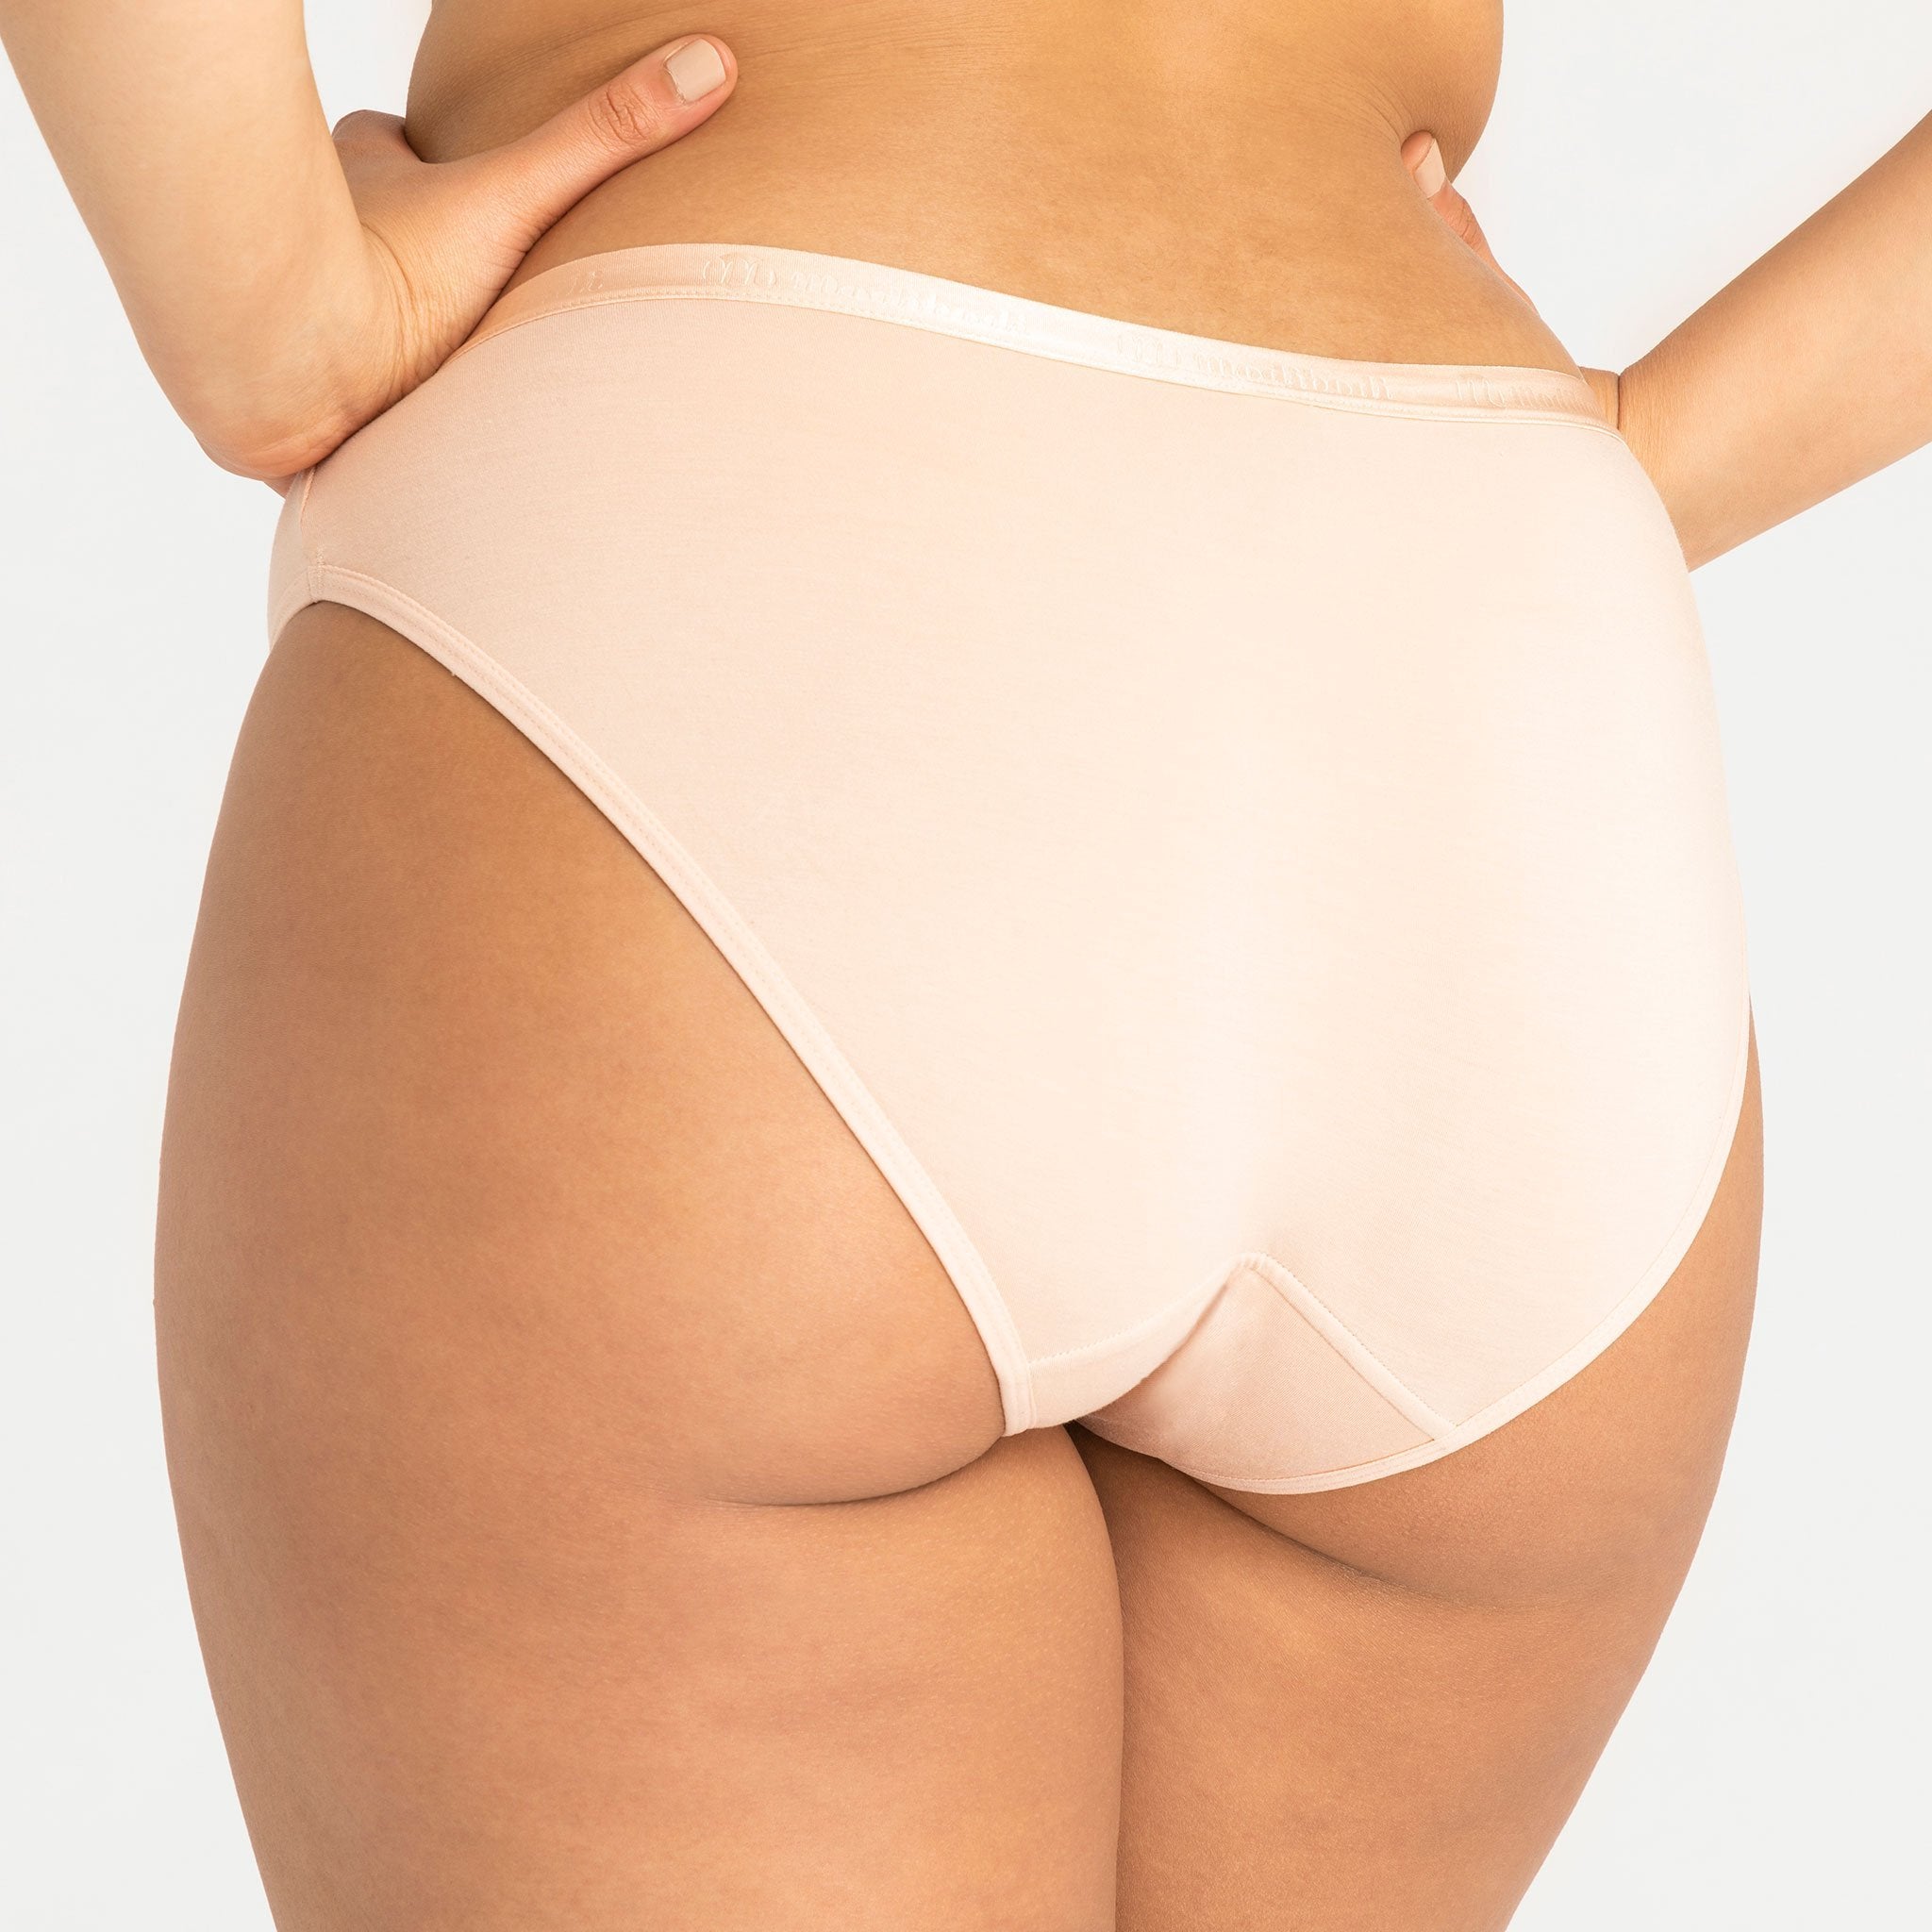 Modibodi Period Underwear/Menstrual Panties Classic Bikini - Heavy